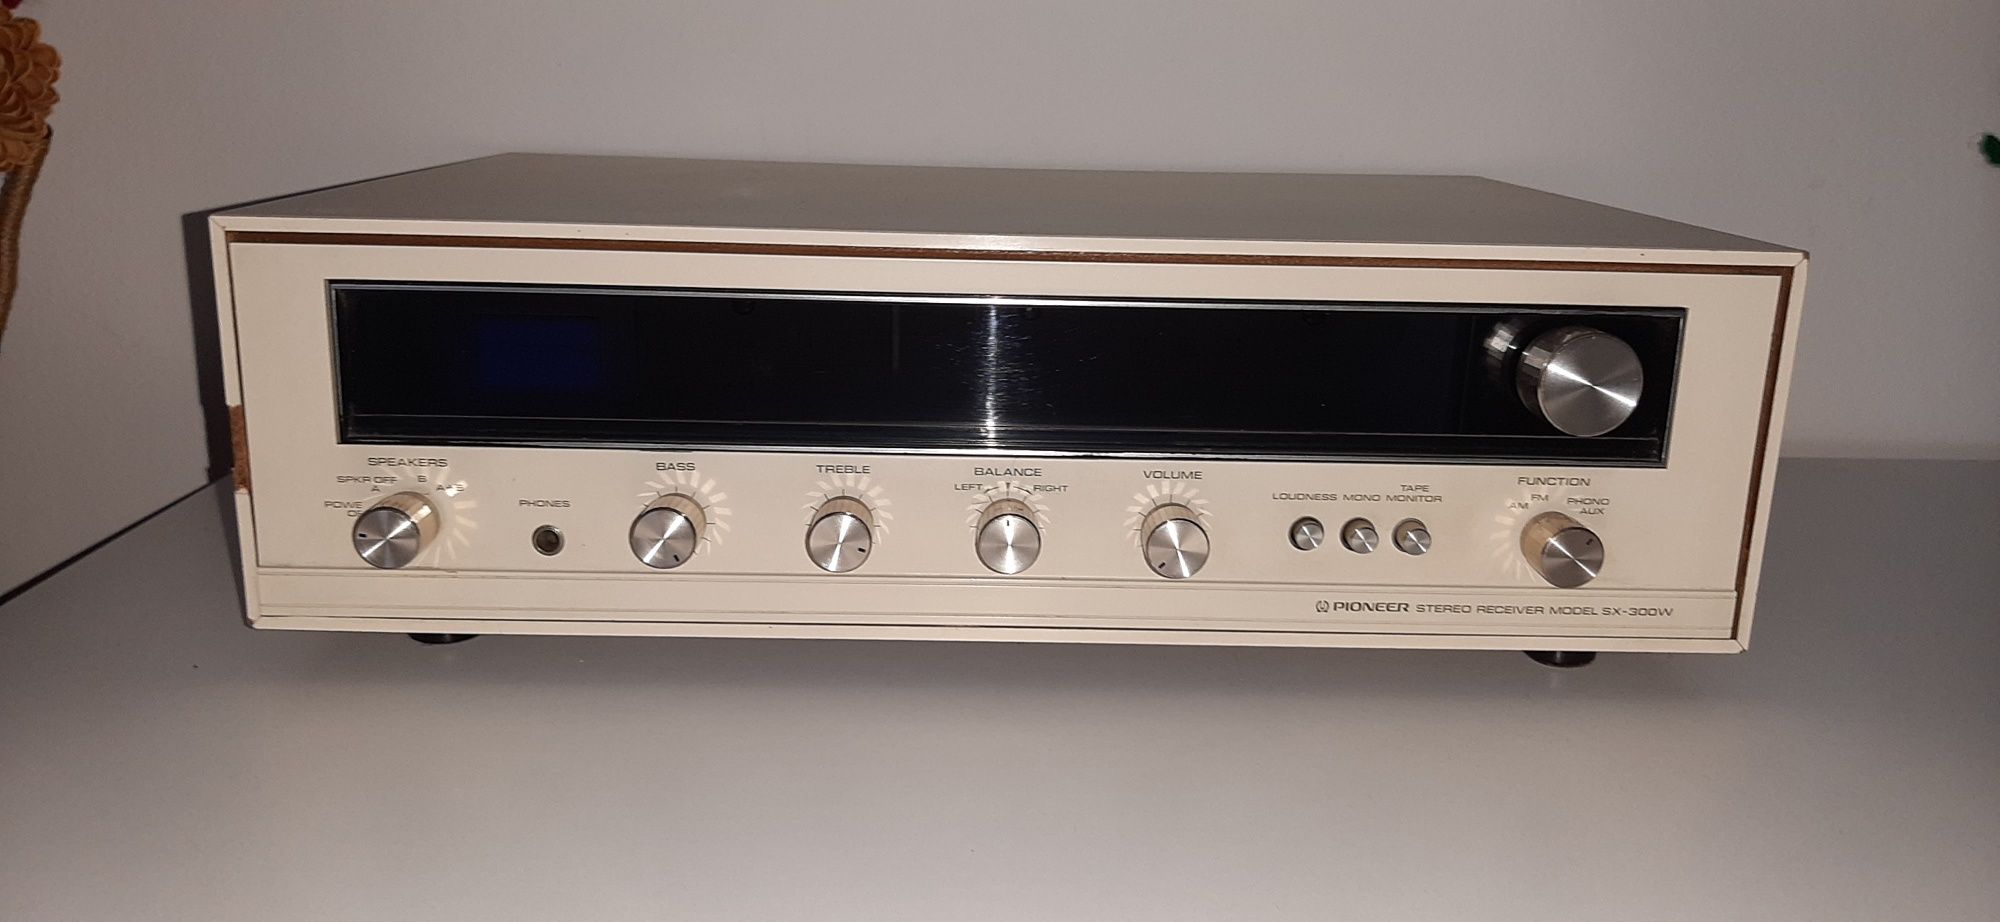 Amplificator pioneer SX 300